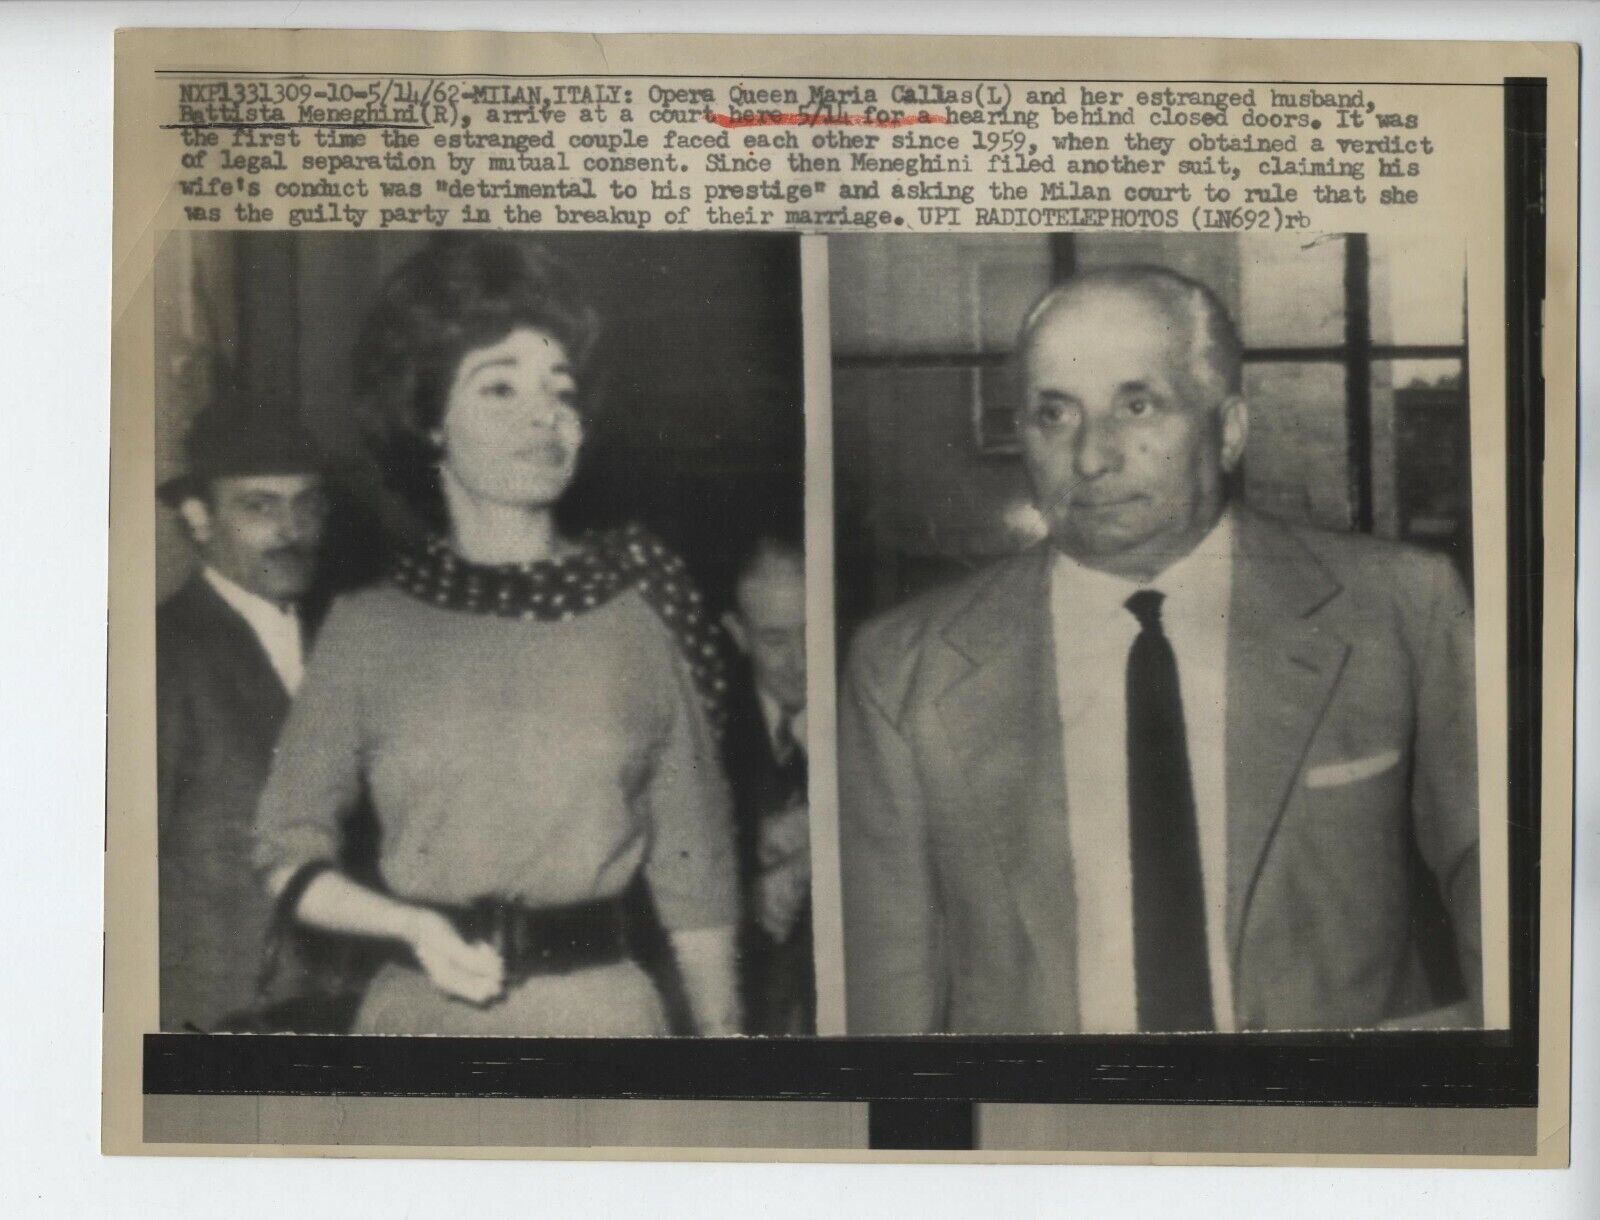 1962 ORIGINAL MARIA CALLAS OPERA STAR PHOTO & ESTRAGED HUSBAND BATTISTA AT COURT